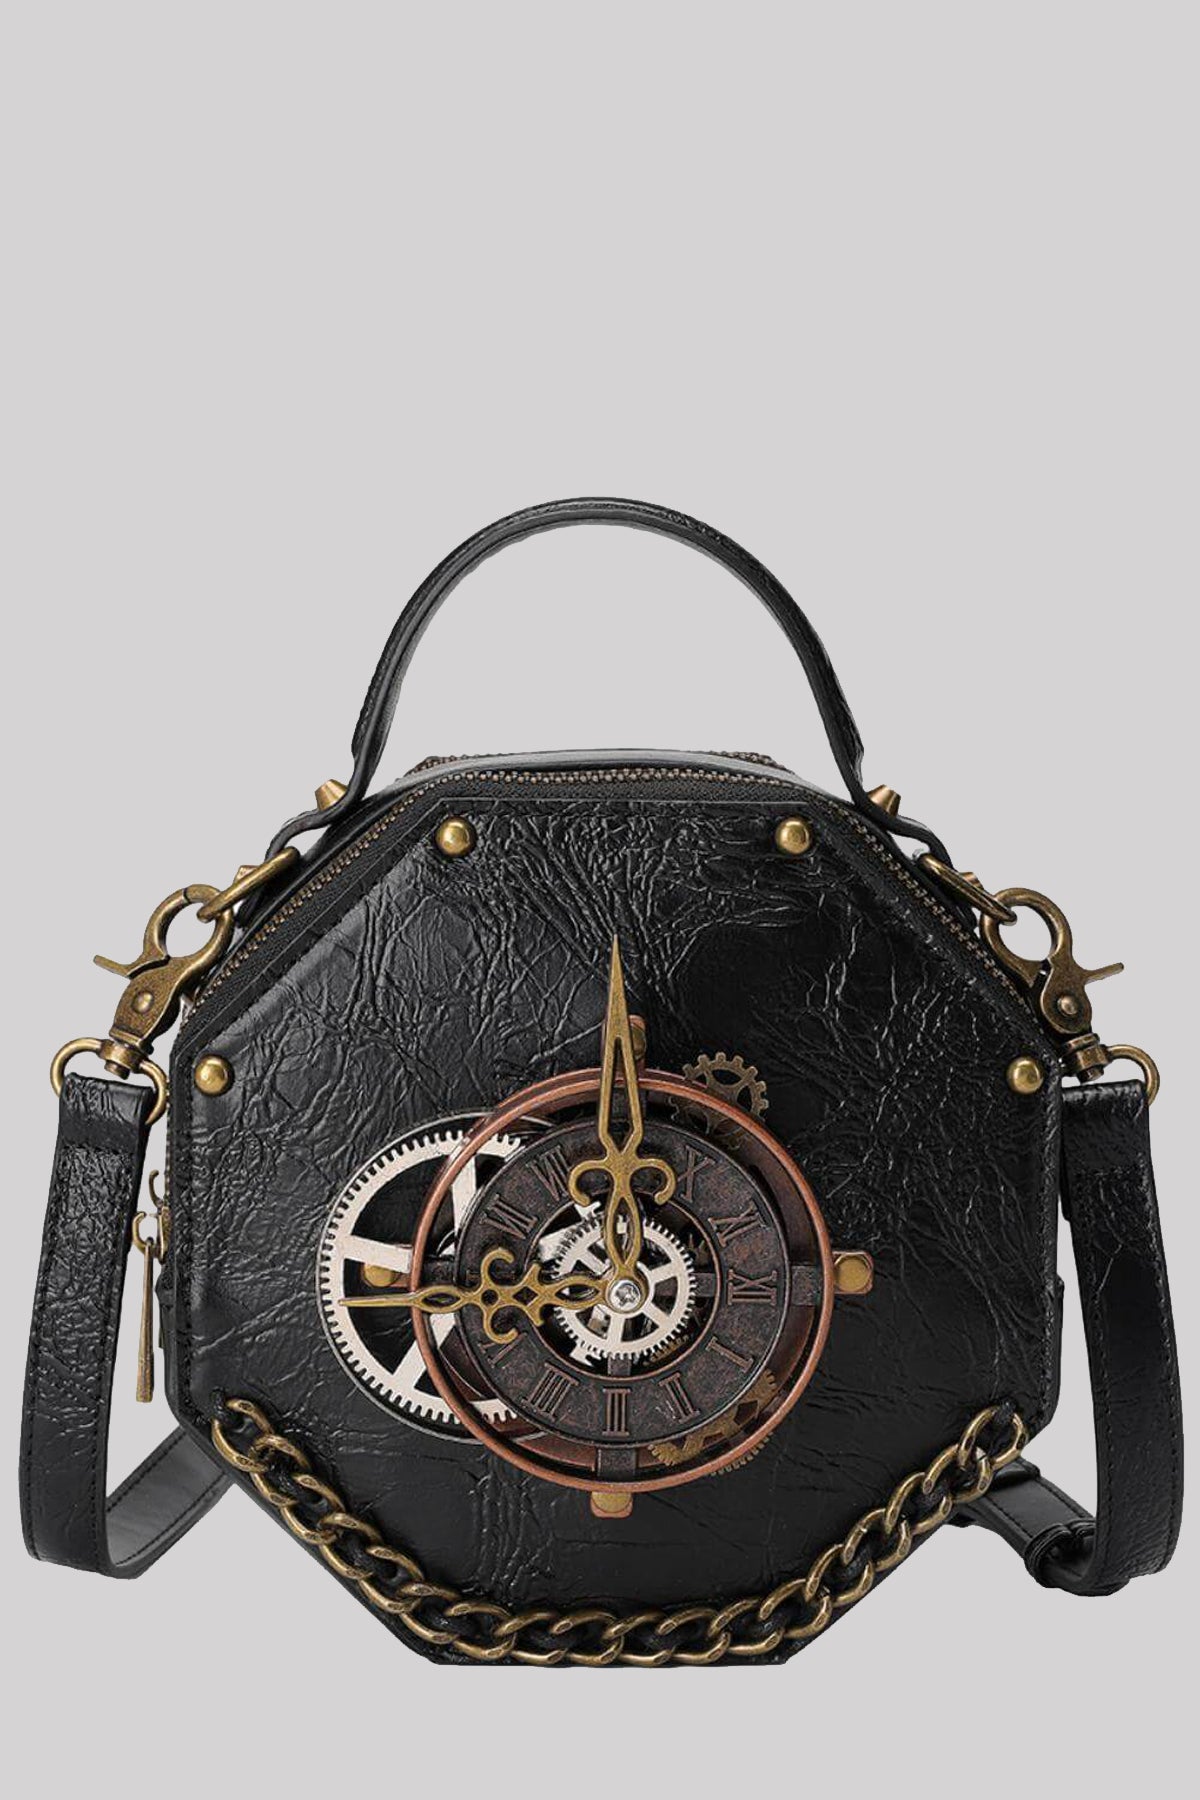 Ro Rox Cyrus Steampunk Clock Faux Leather Cross Body Bag